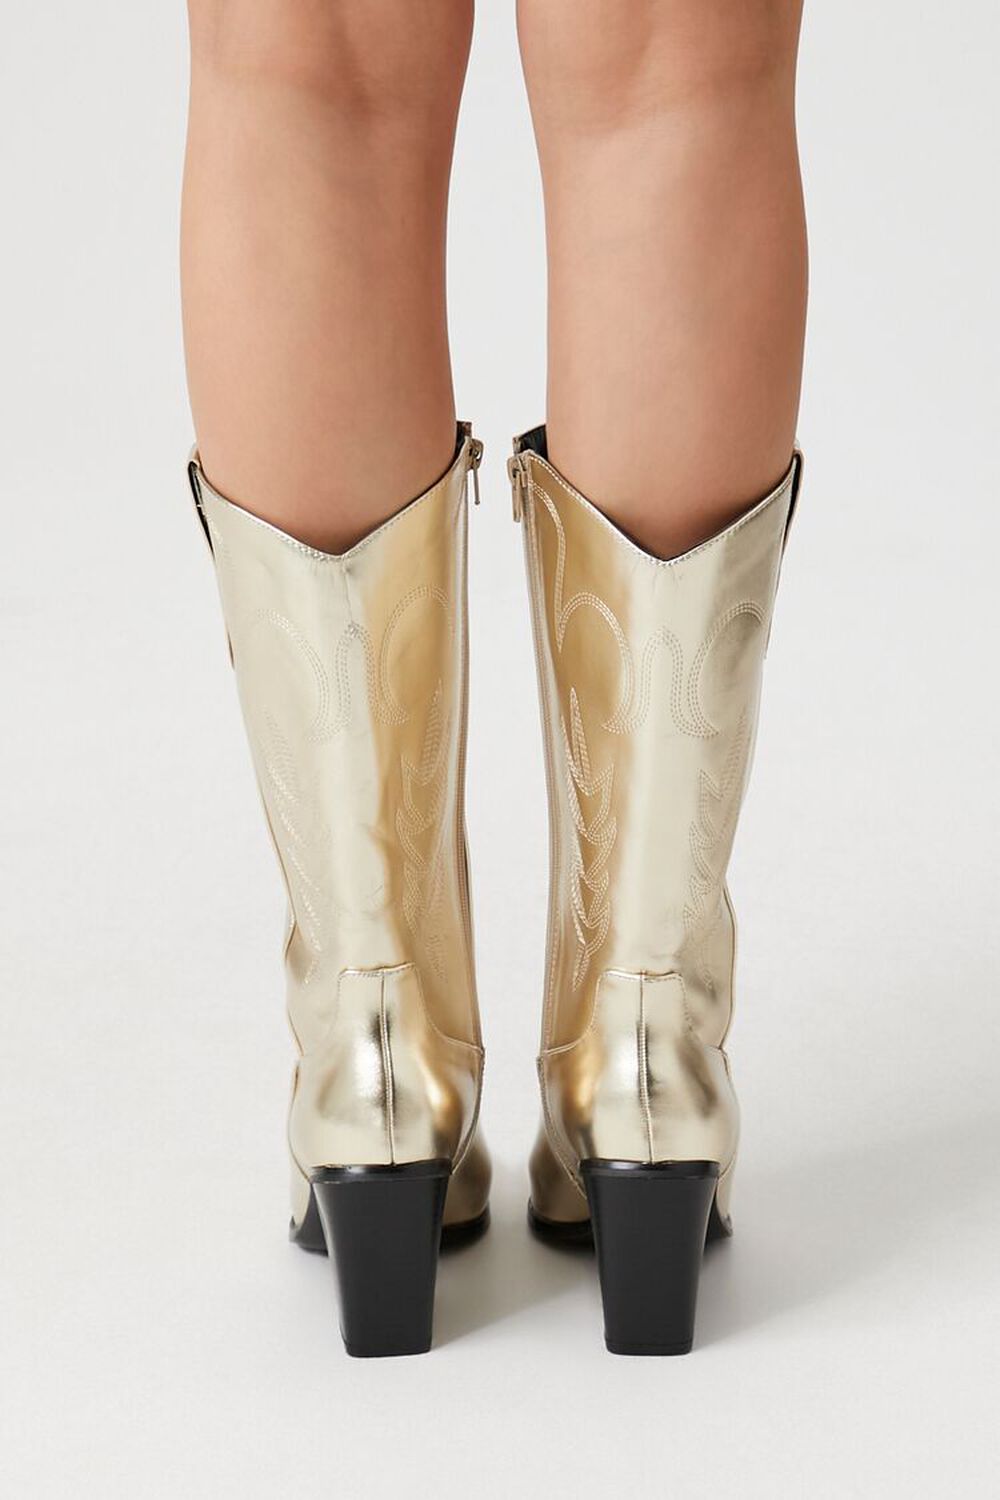 GOLD Metallic Cowboy Boots, image 3